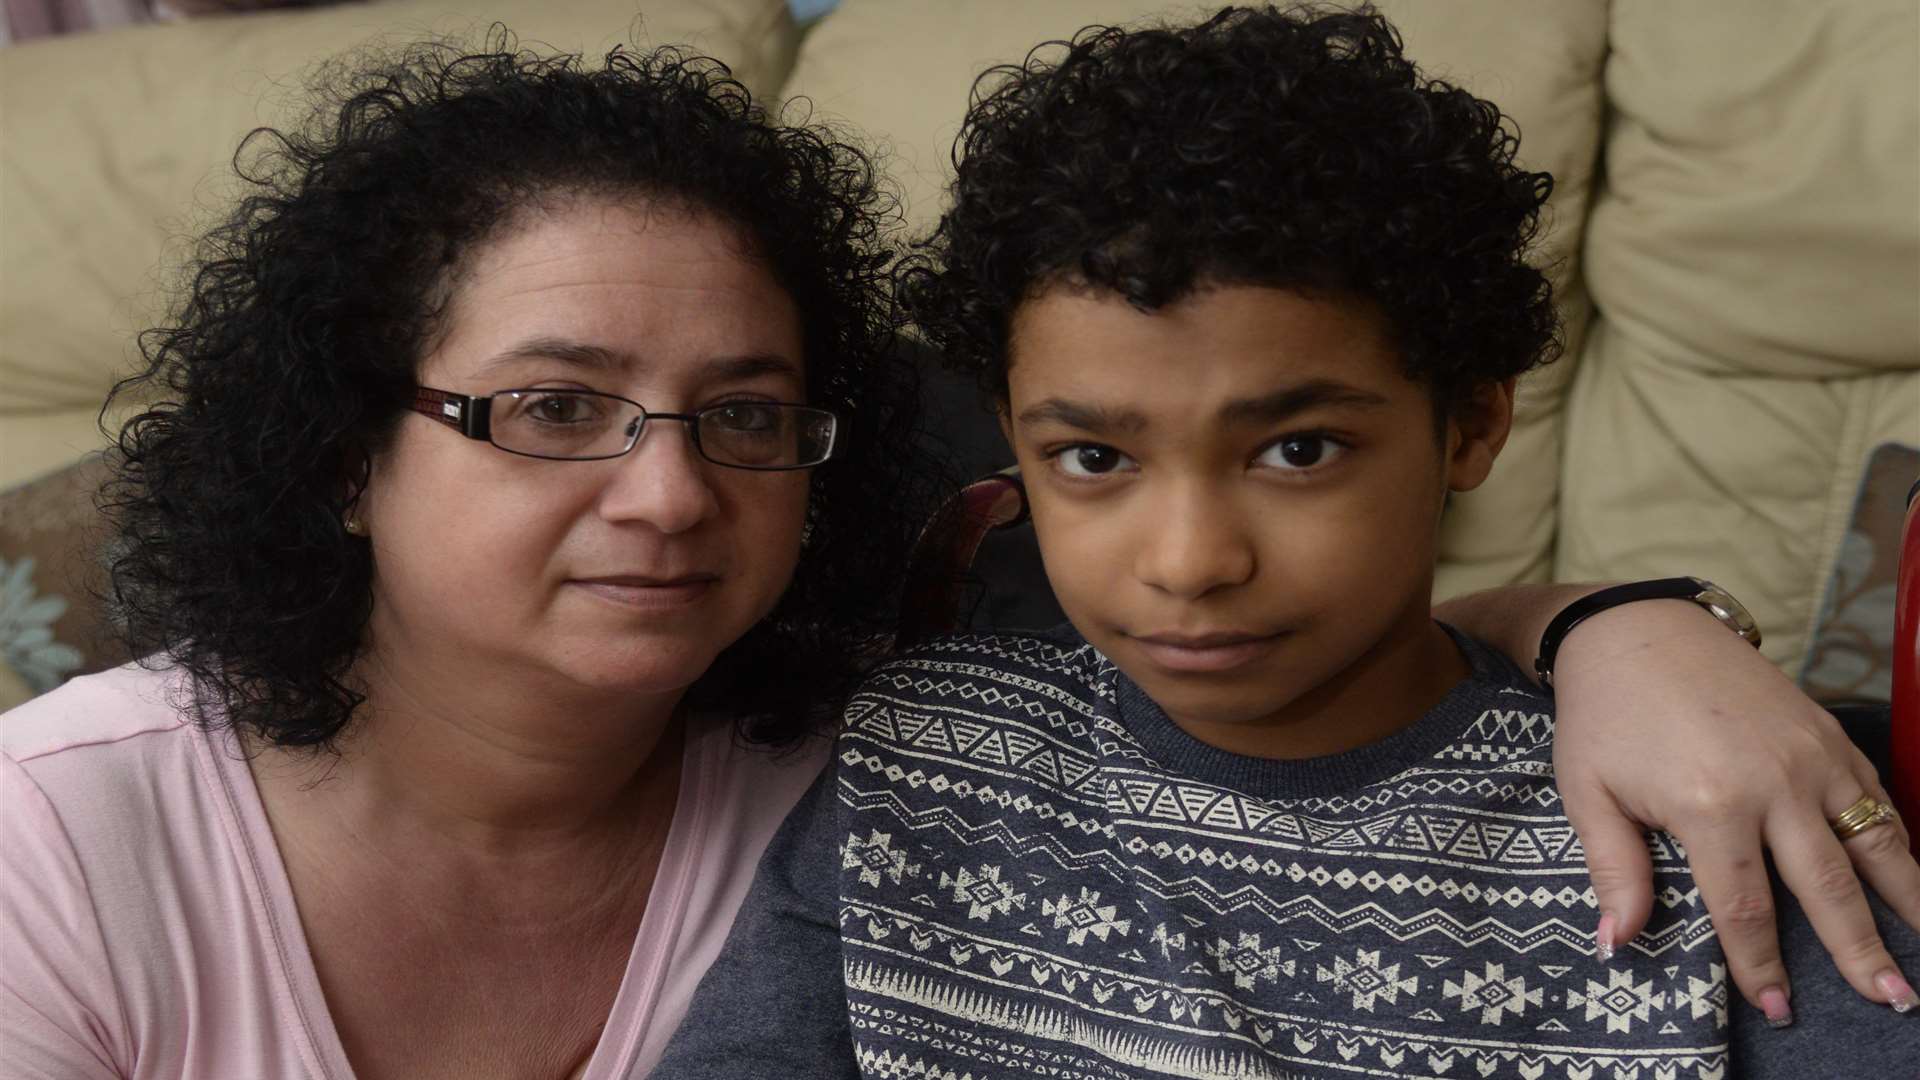 Natasha Mcintosh and her son Isaac, 9, who suffered a knee injury